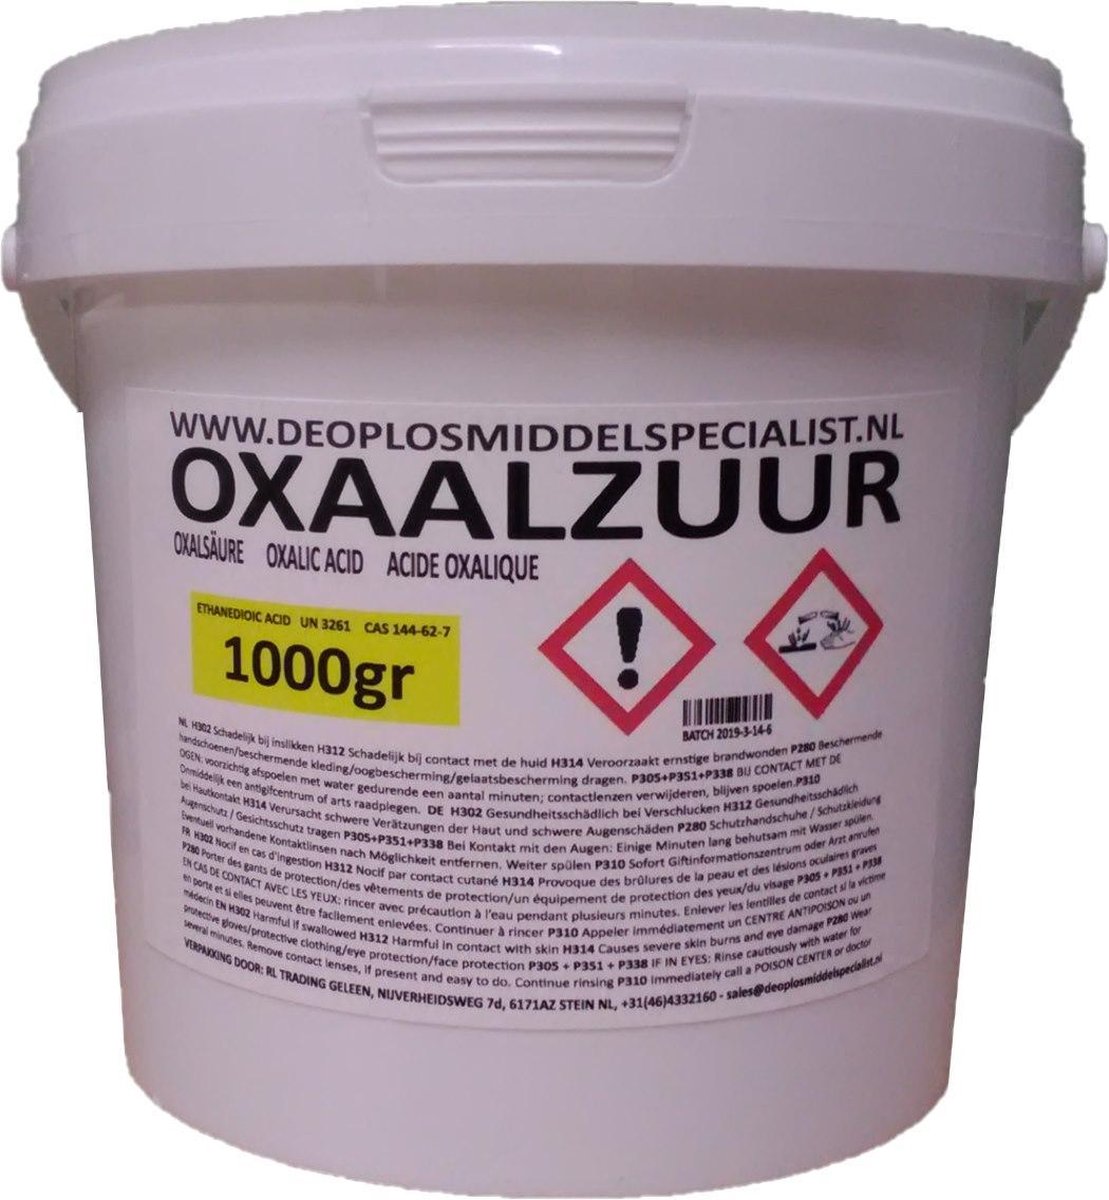 Oxaalzuur (Ontweringswater) 1000gr - DeOplosmiddelspecialist